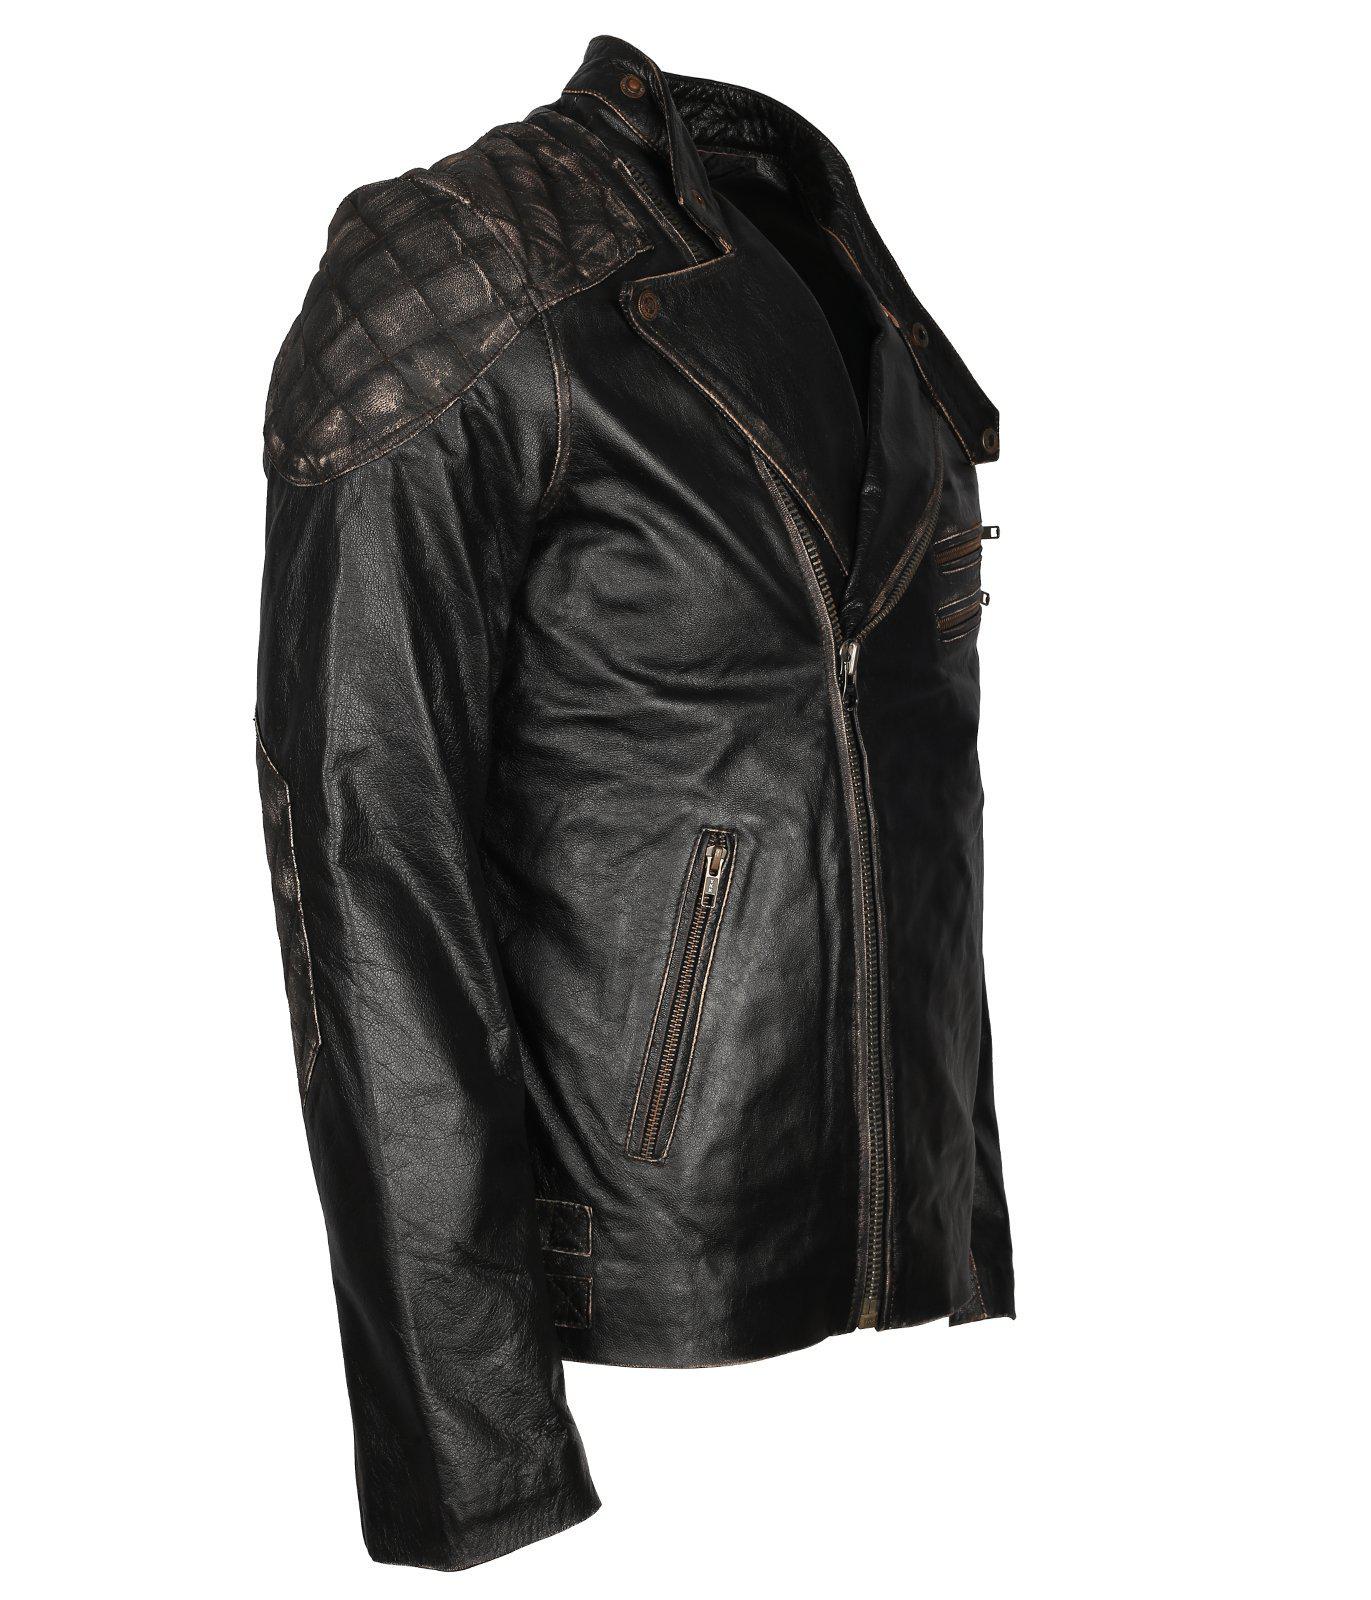 Skull and Crossbones Black Leather Jacket